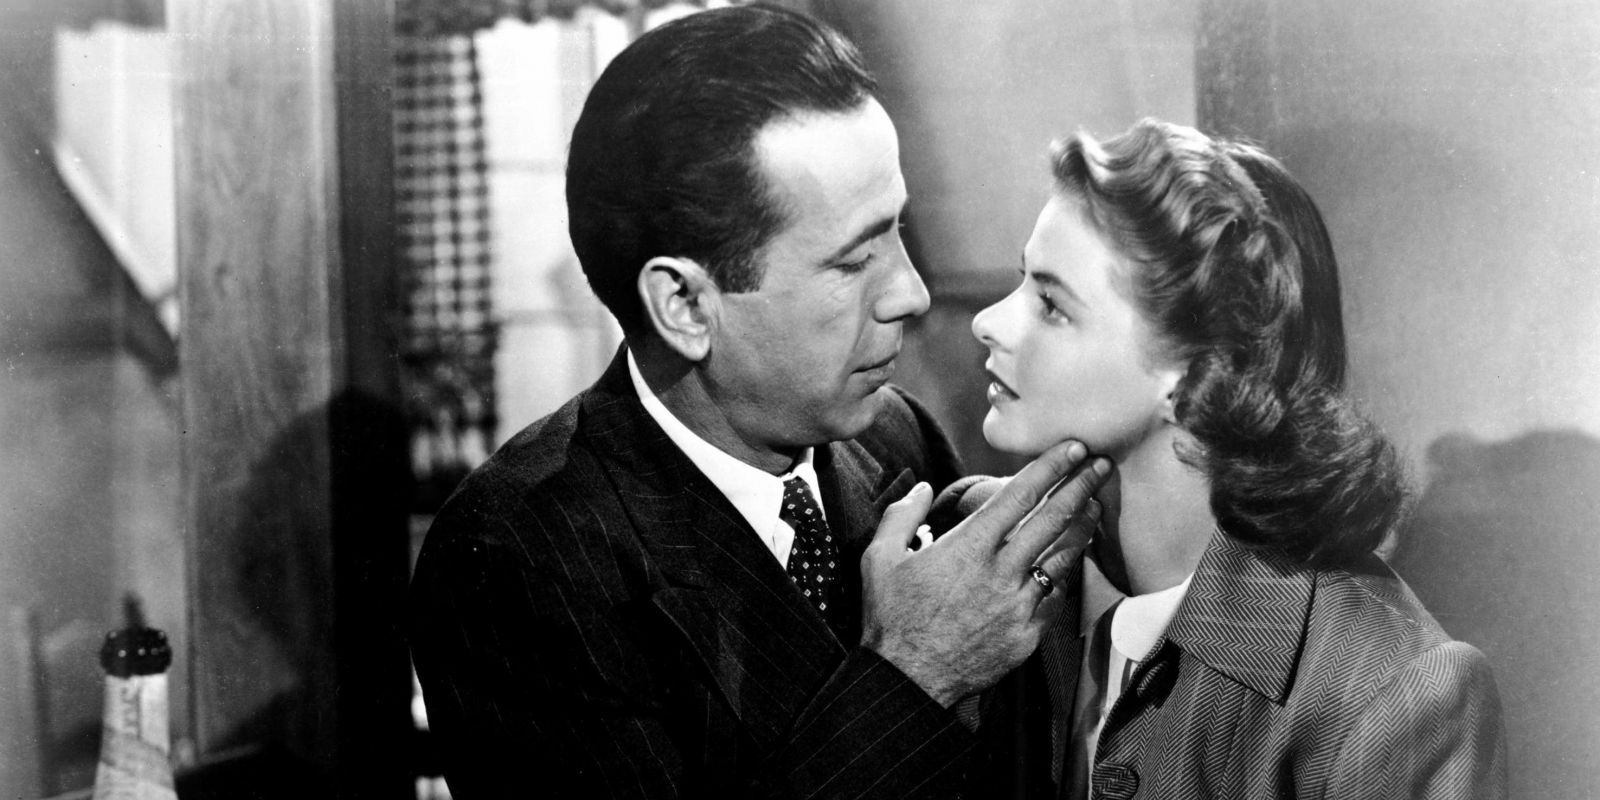 Humphrey Bogart As Rick & Ingrid Bergman As Ilsa In Casablanca.jpg